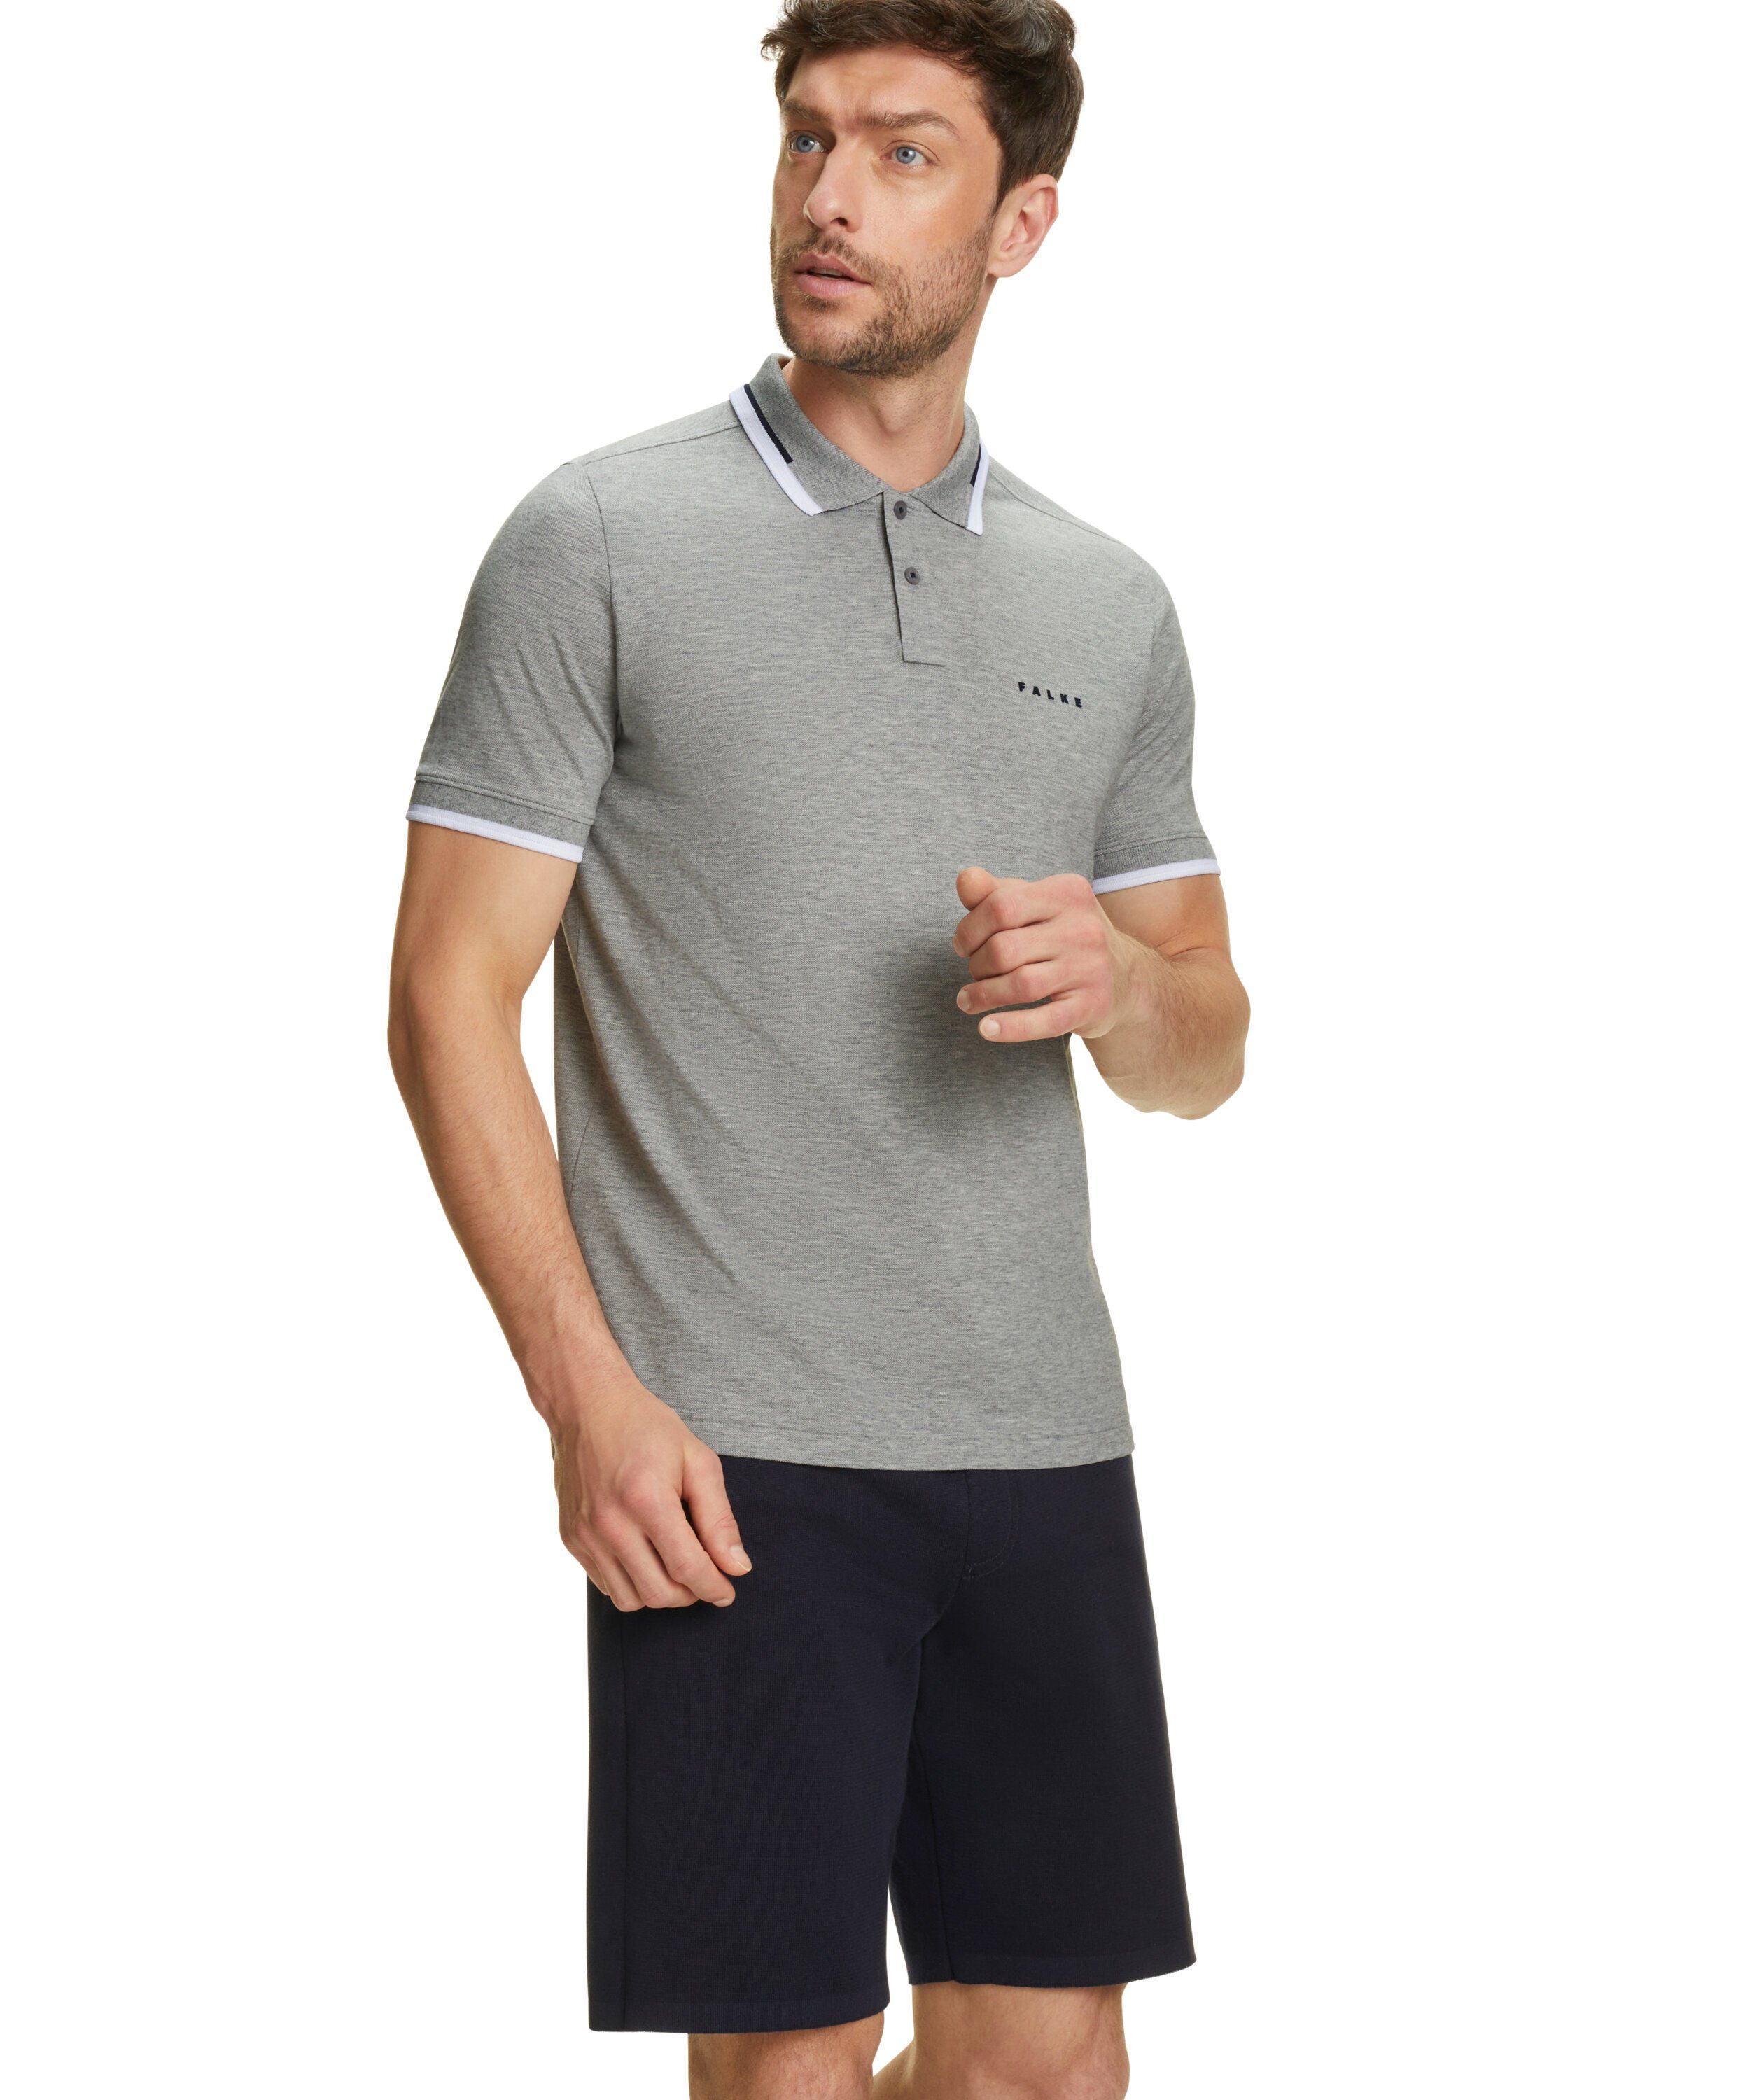 FALKE Poloshirt aus grey light Pima-Baumwolle hochwertiger (3400)